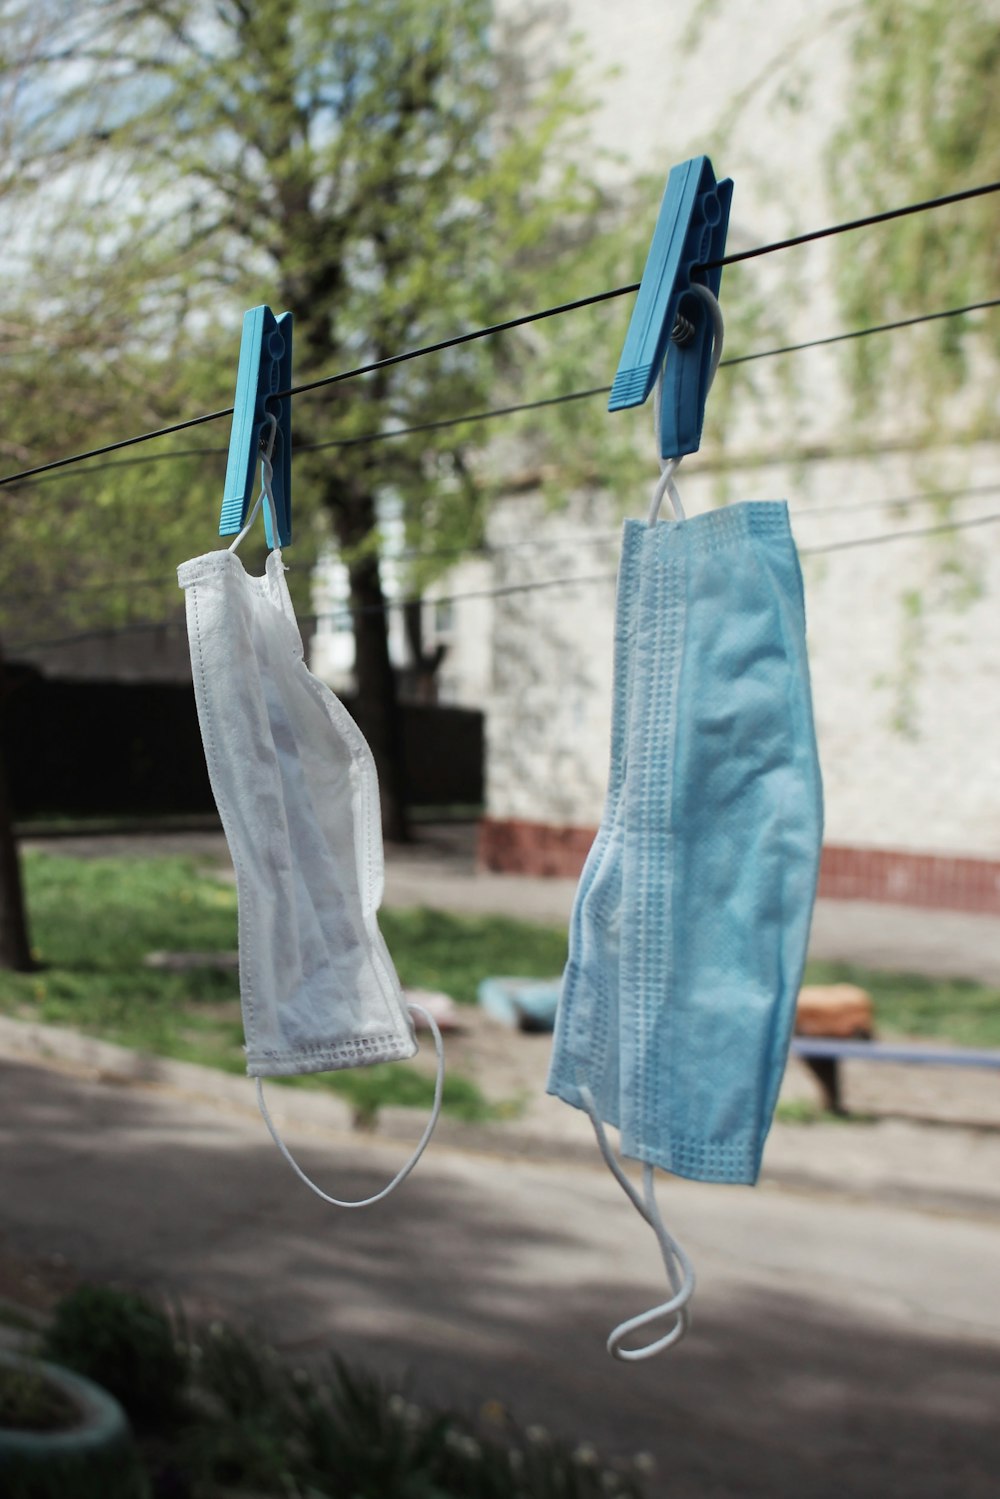 blue denim jeans hanged on clothes hanger